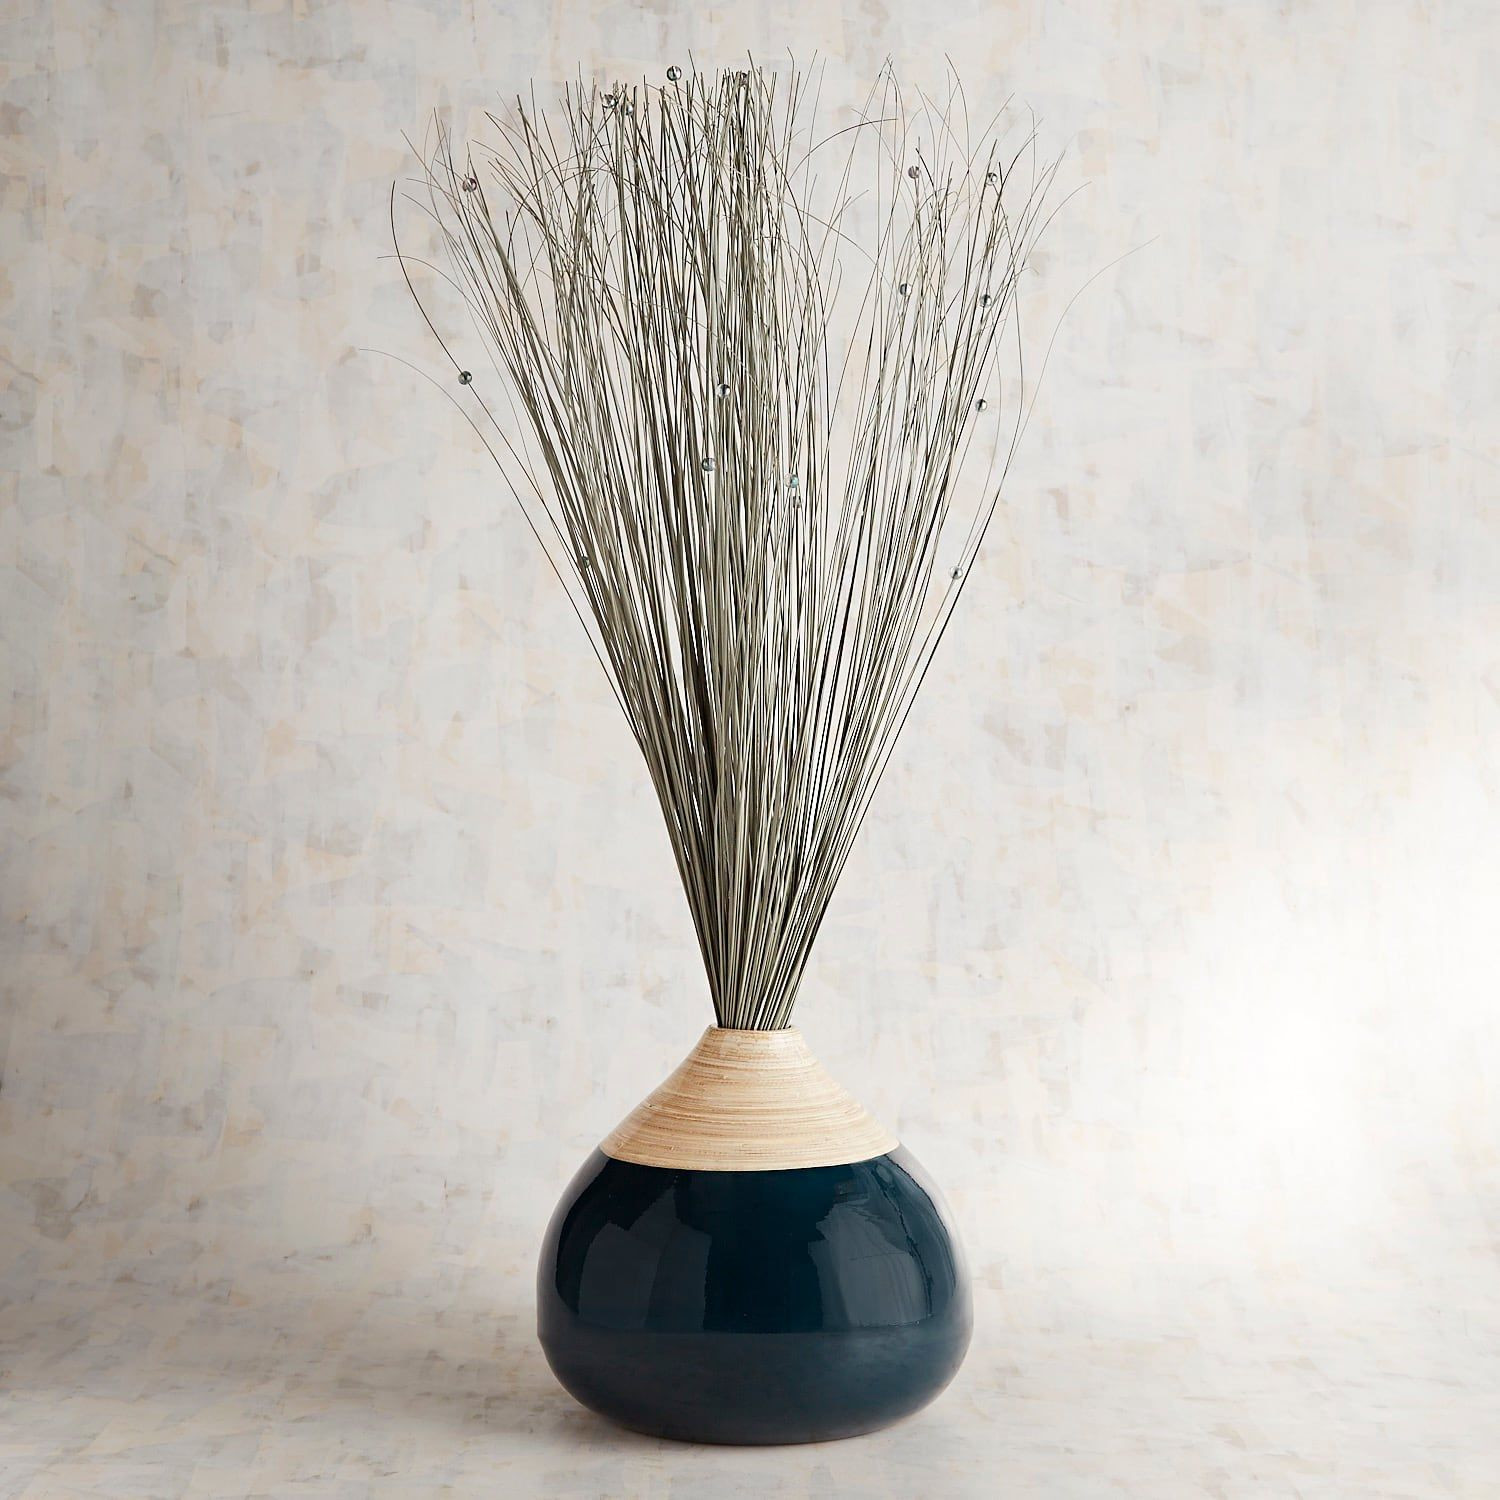 22 Fashionable Bamboo Vase 2022 free download bamboo vase of gray navy ting in bamboo vase pinterest navy gray and palm regarding gray navy ting in bamboo vase